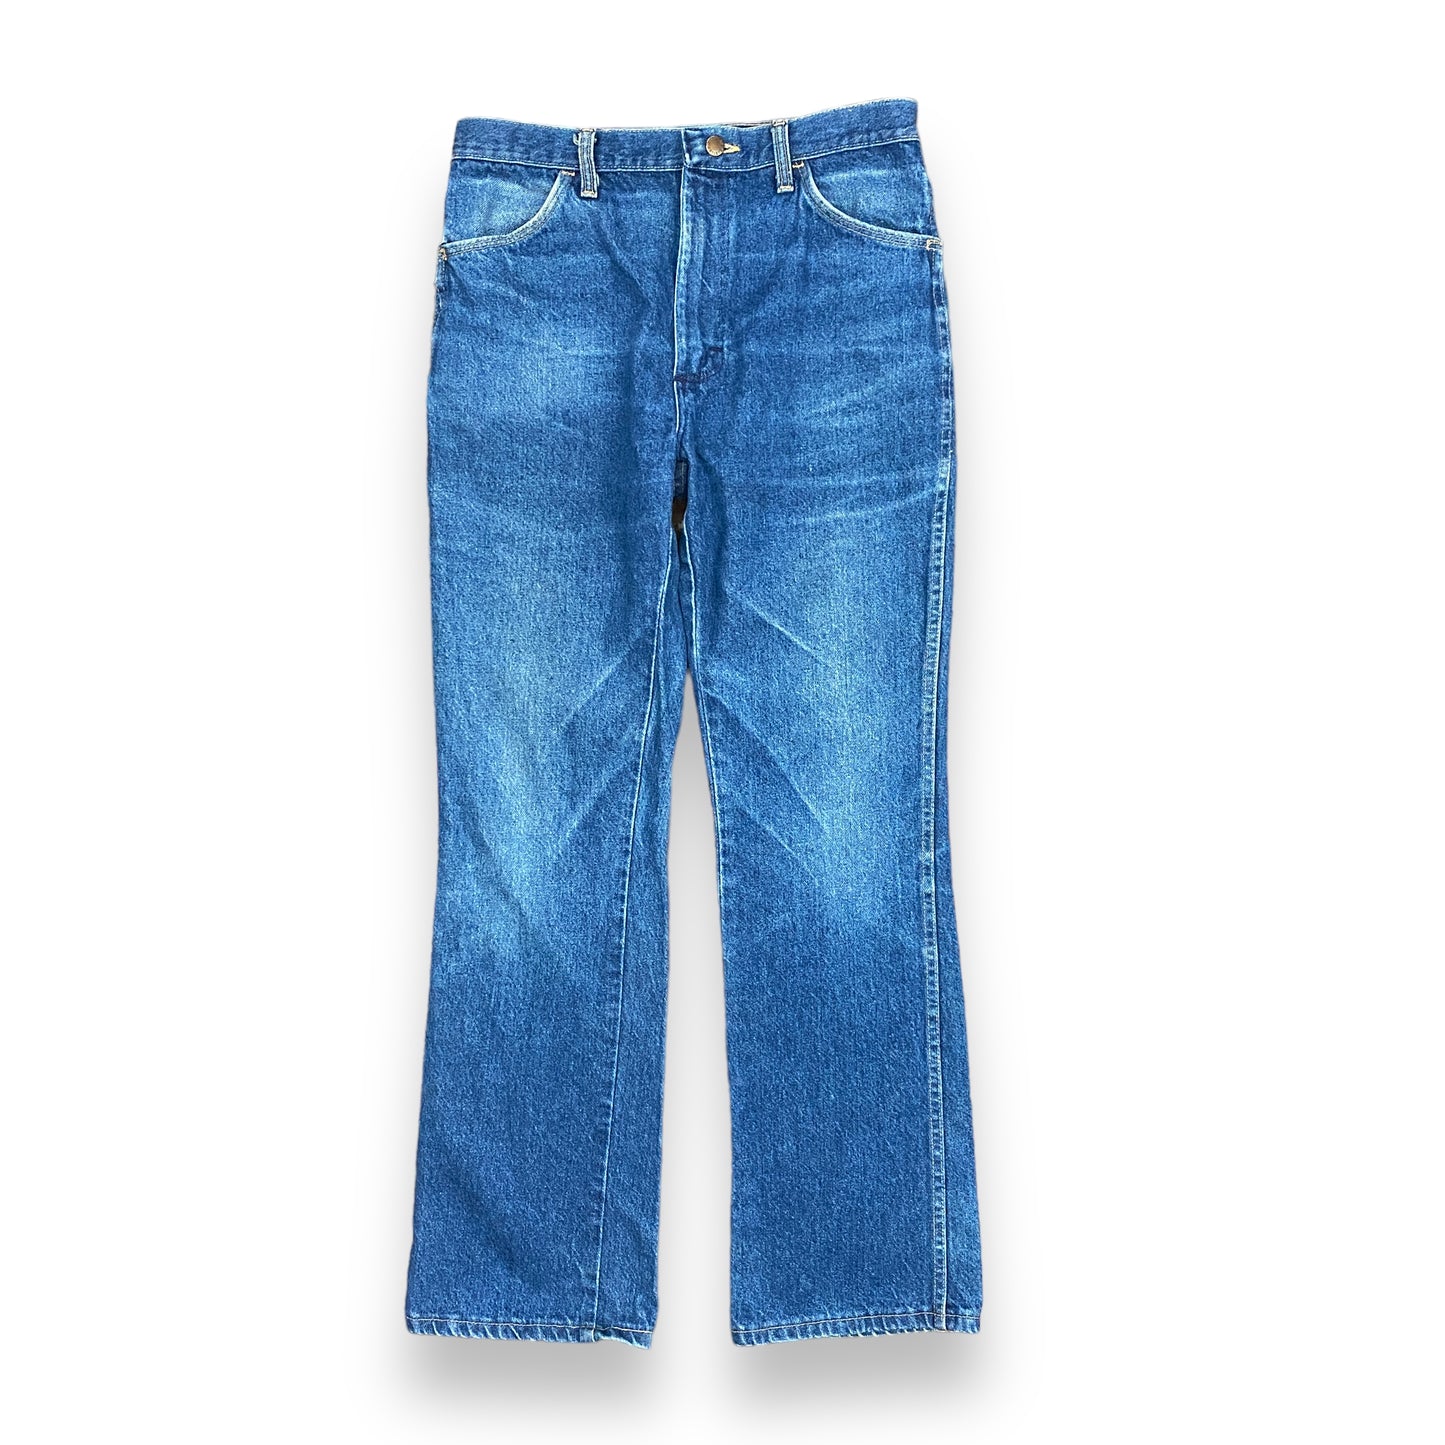 1980s Rustler Medium Wash Denim Jeans - 32"x31"